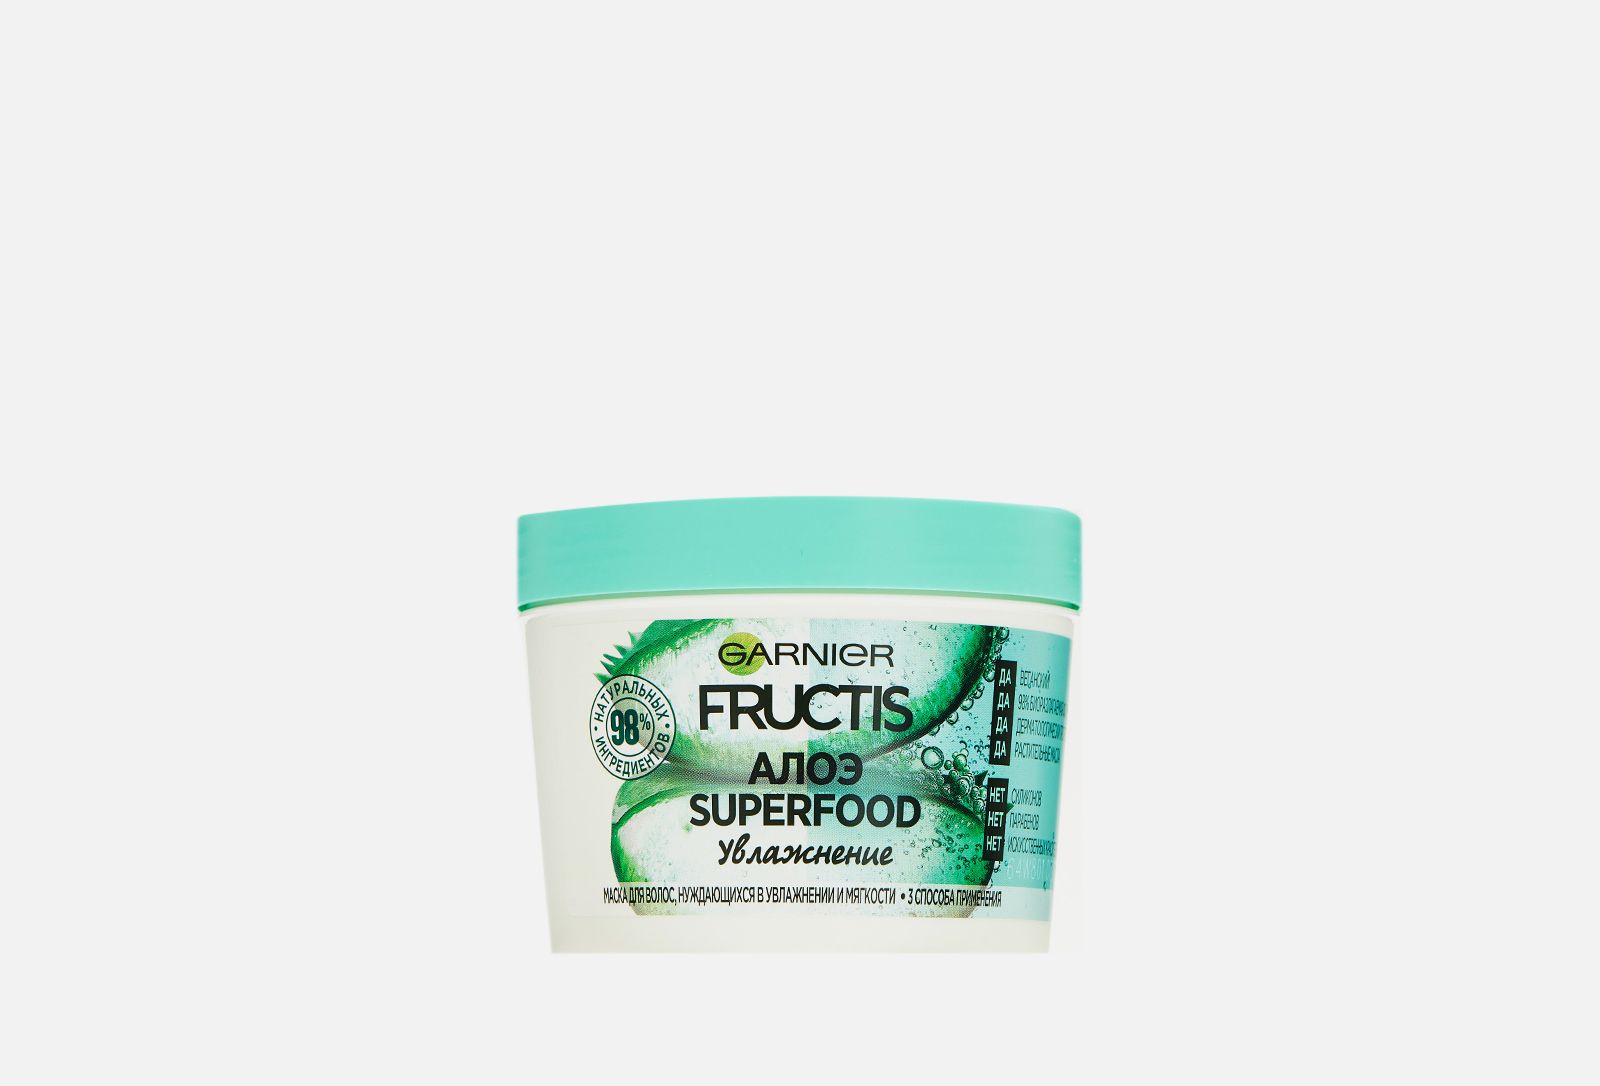 Маска для волос superfood. Fructis Superfood маска для волос алоэ 390мл. Garnier маска для волос алоэ. Гарньер суперфуд алоэ маска для волос. Маска увлажняющая для волос Superfood Garnier с алоэ.